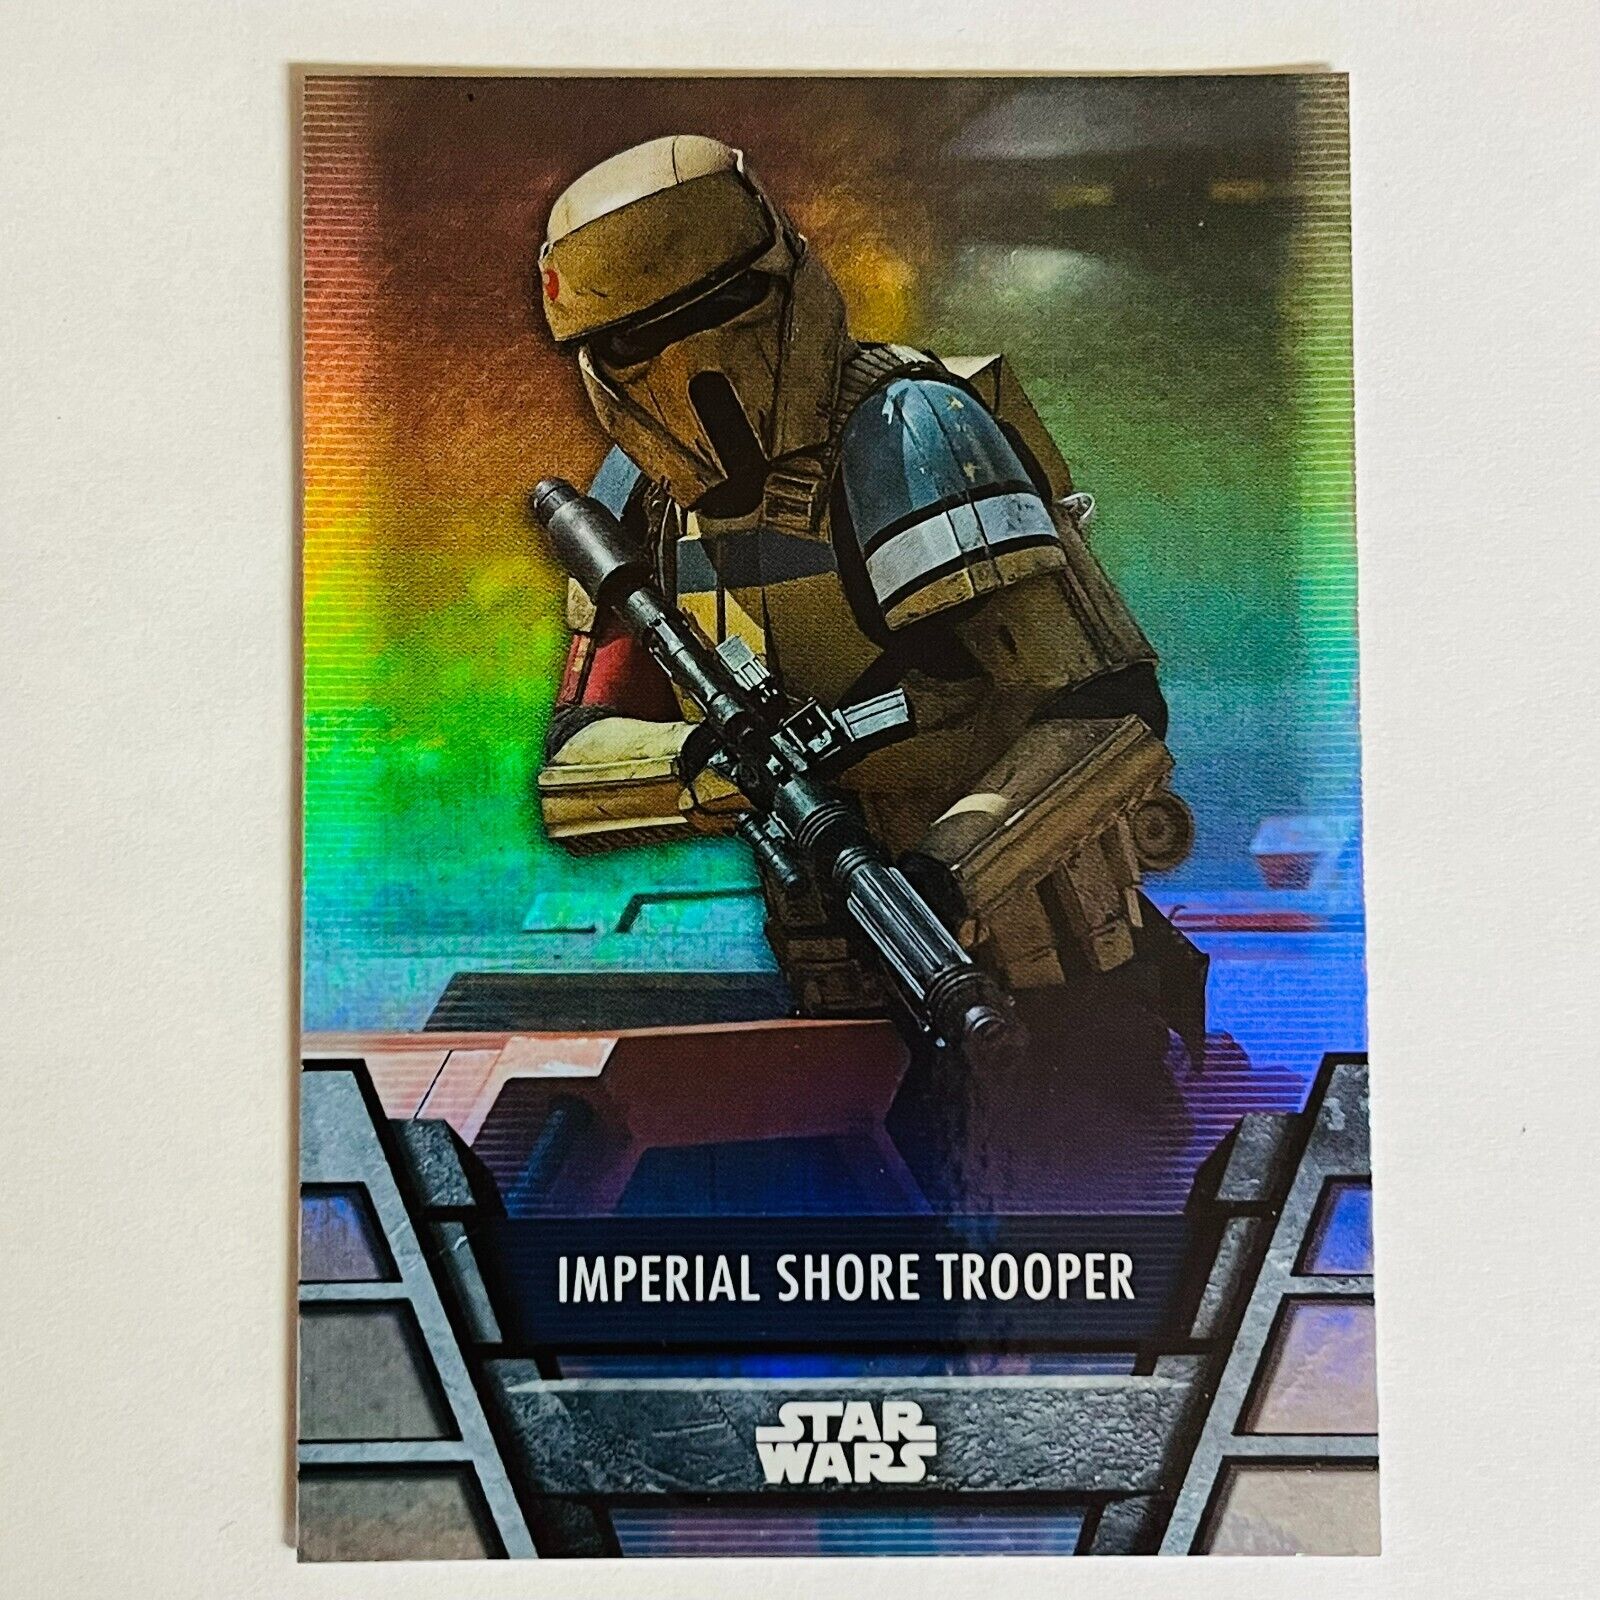 2020 Topps Star Wars Holocron Foil Base Card Emp-11 Imperial Shore Trooper